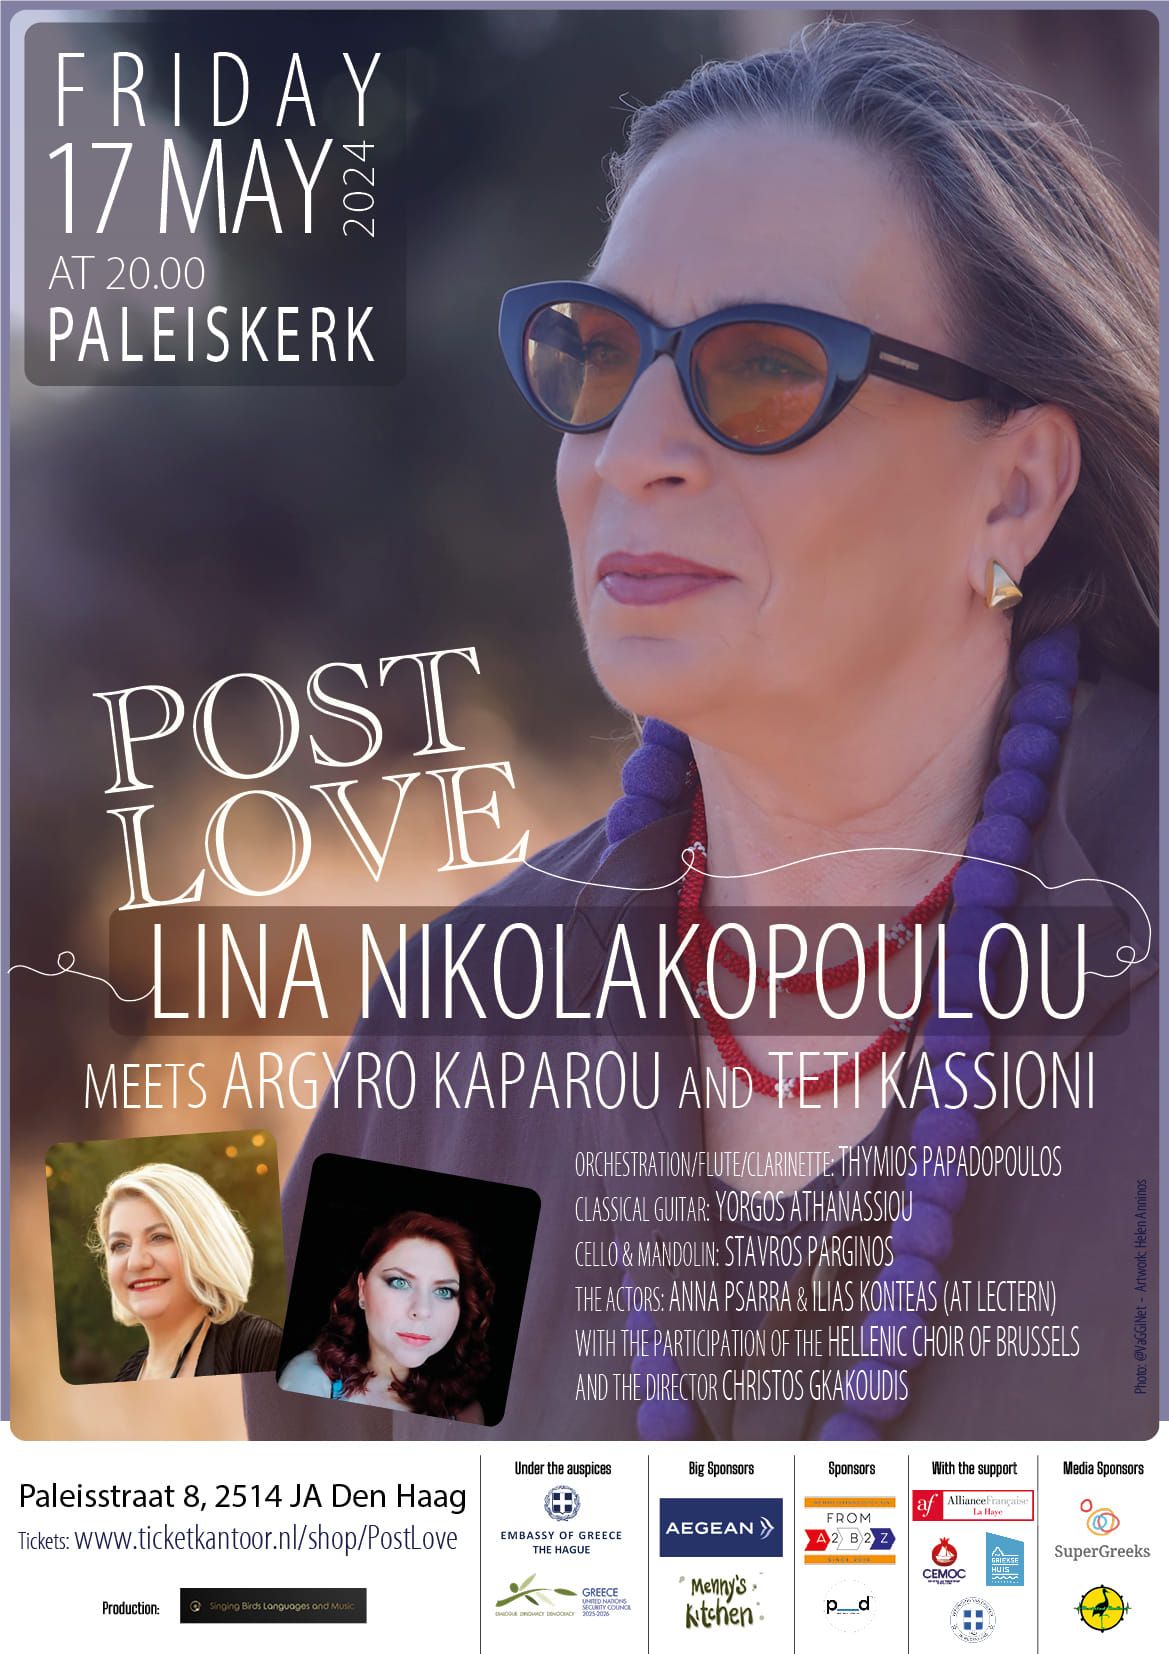 "POST LOVE" LINA NIKOLAKOPOULOU MEETS ARGYRO KAPAROU & TETI KASSIONI